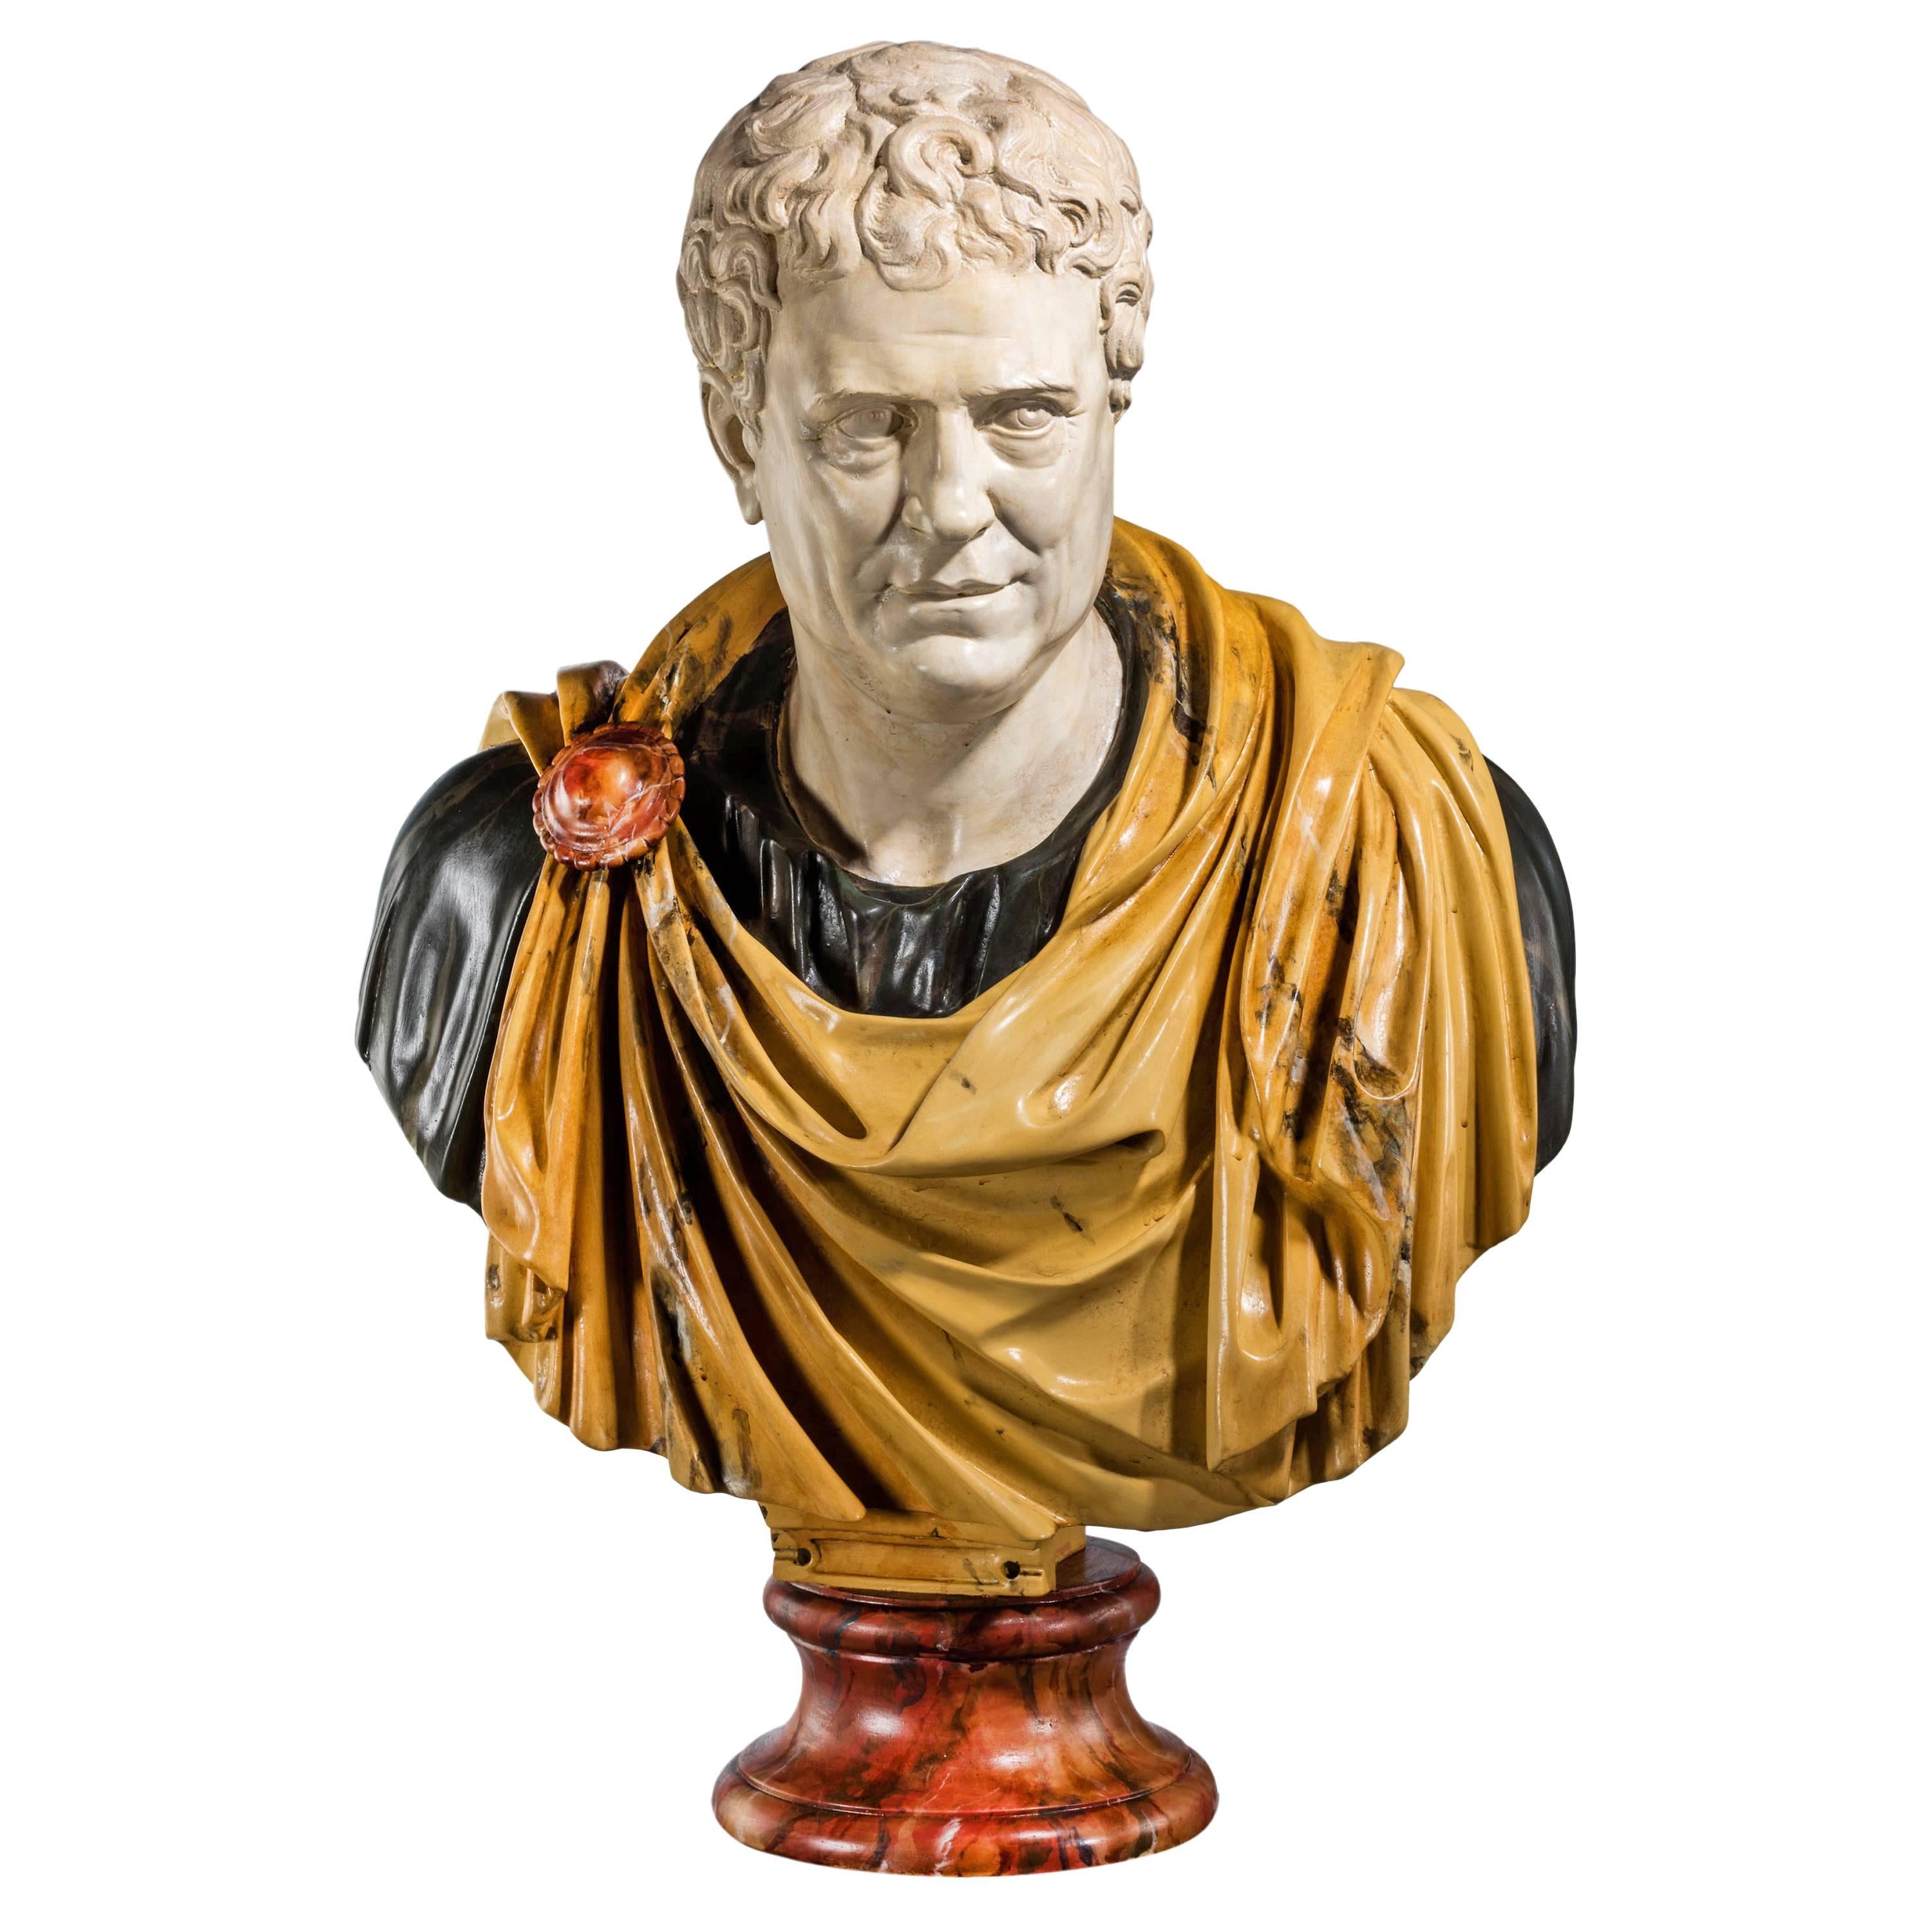 Bust of a Roman Popularis Politician Tiberius Gracchus